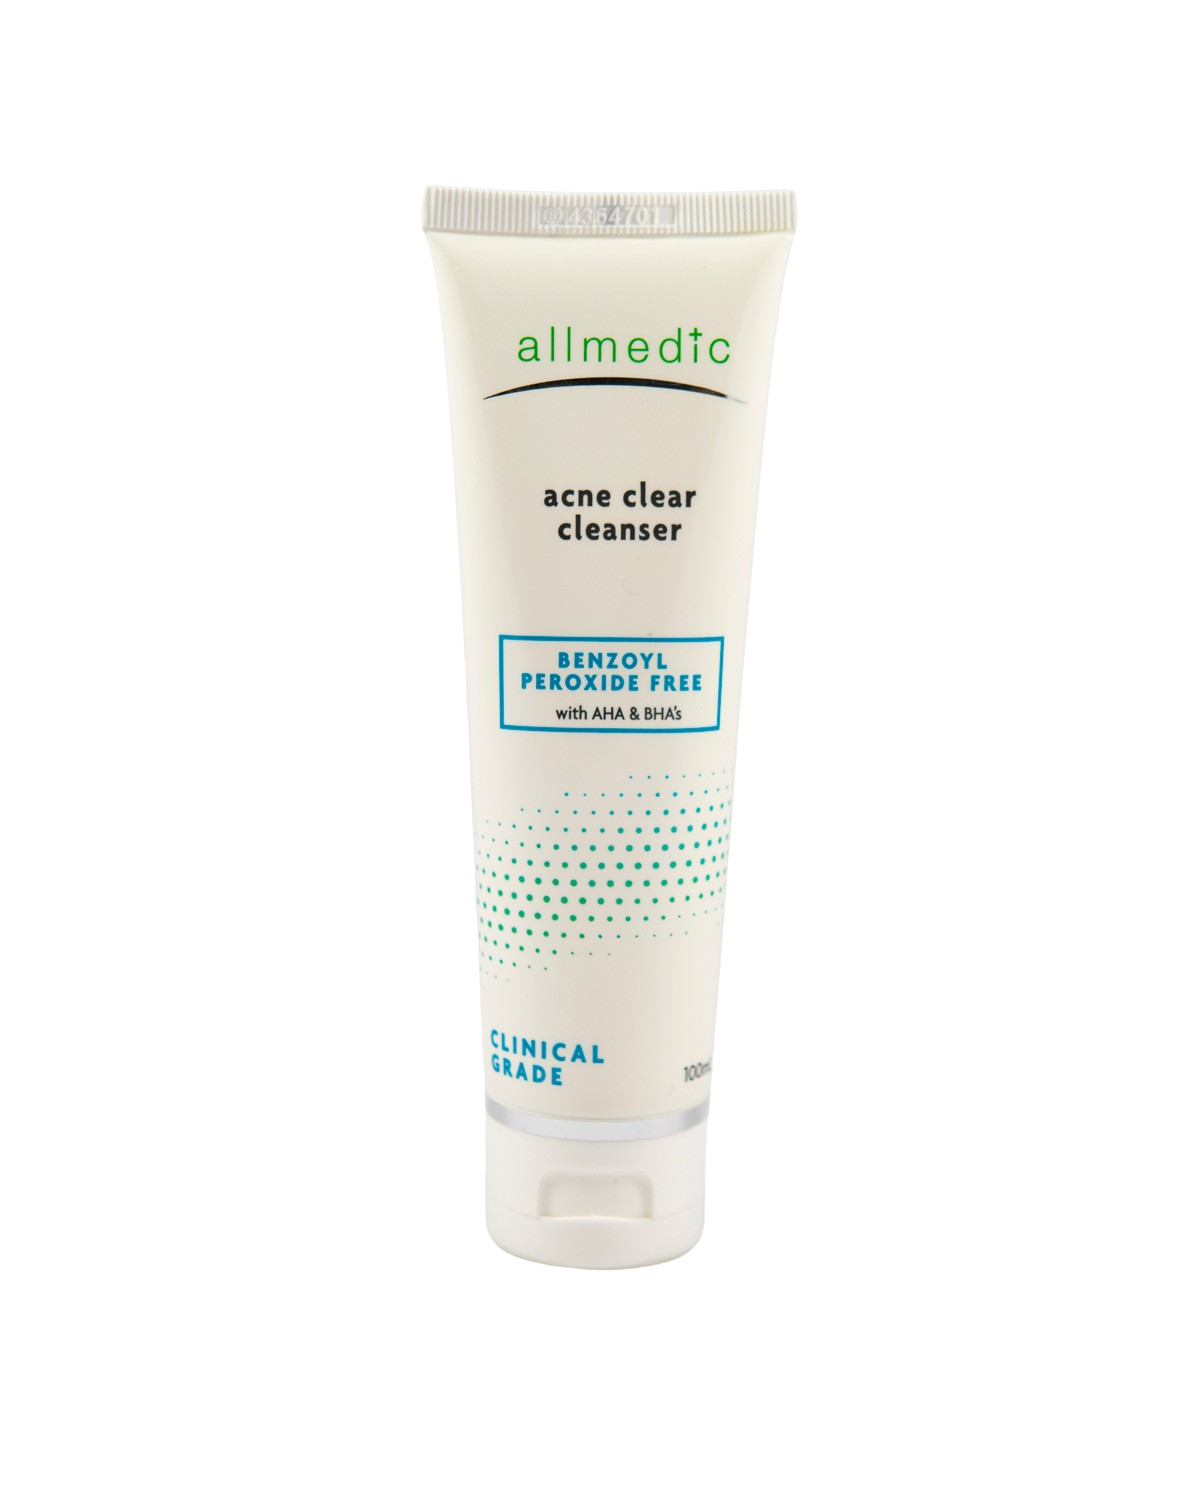 allmedic Acne Clear Cleanser